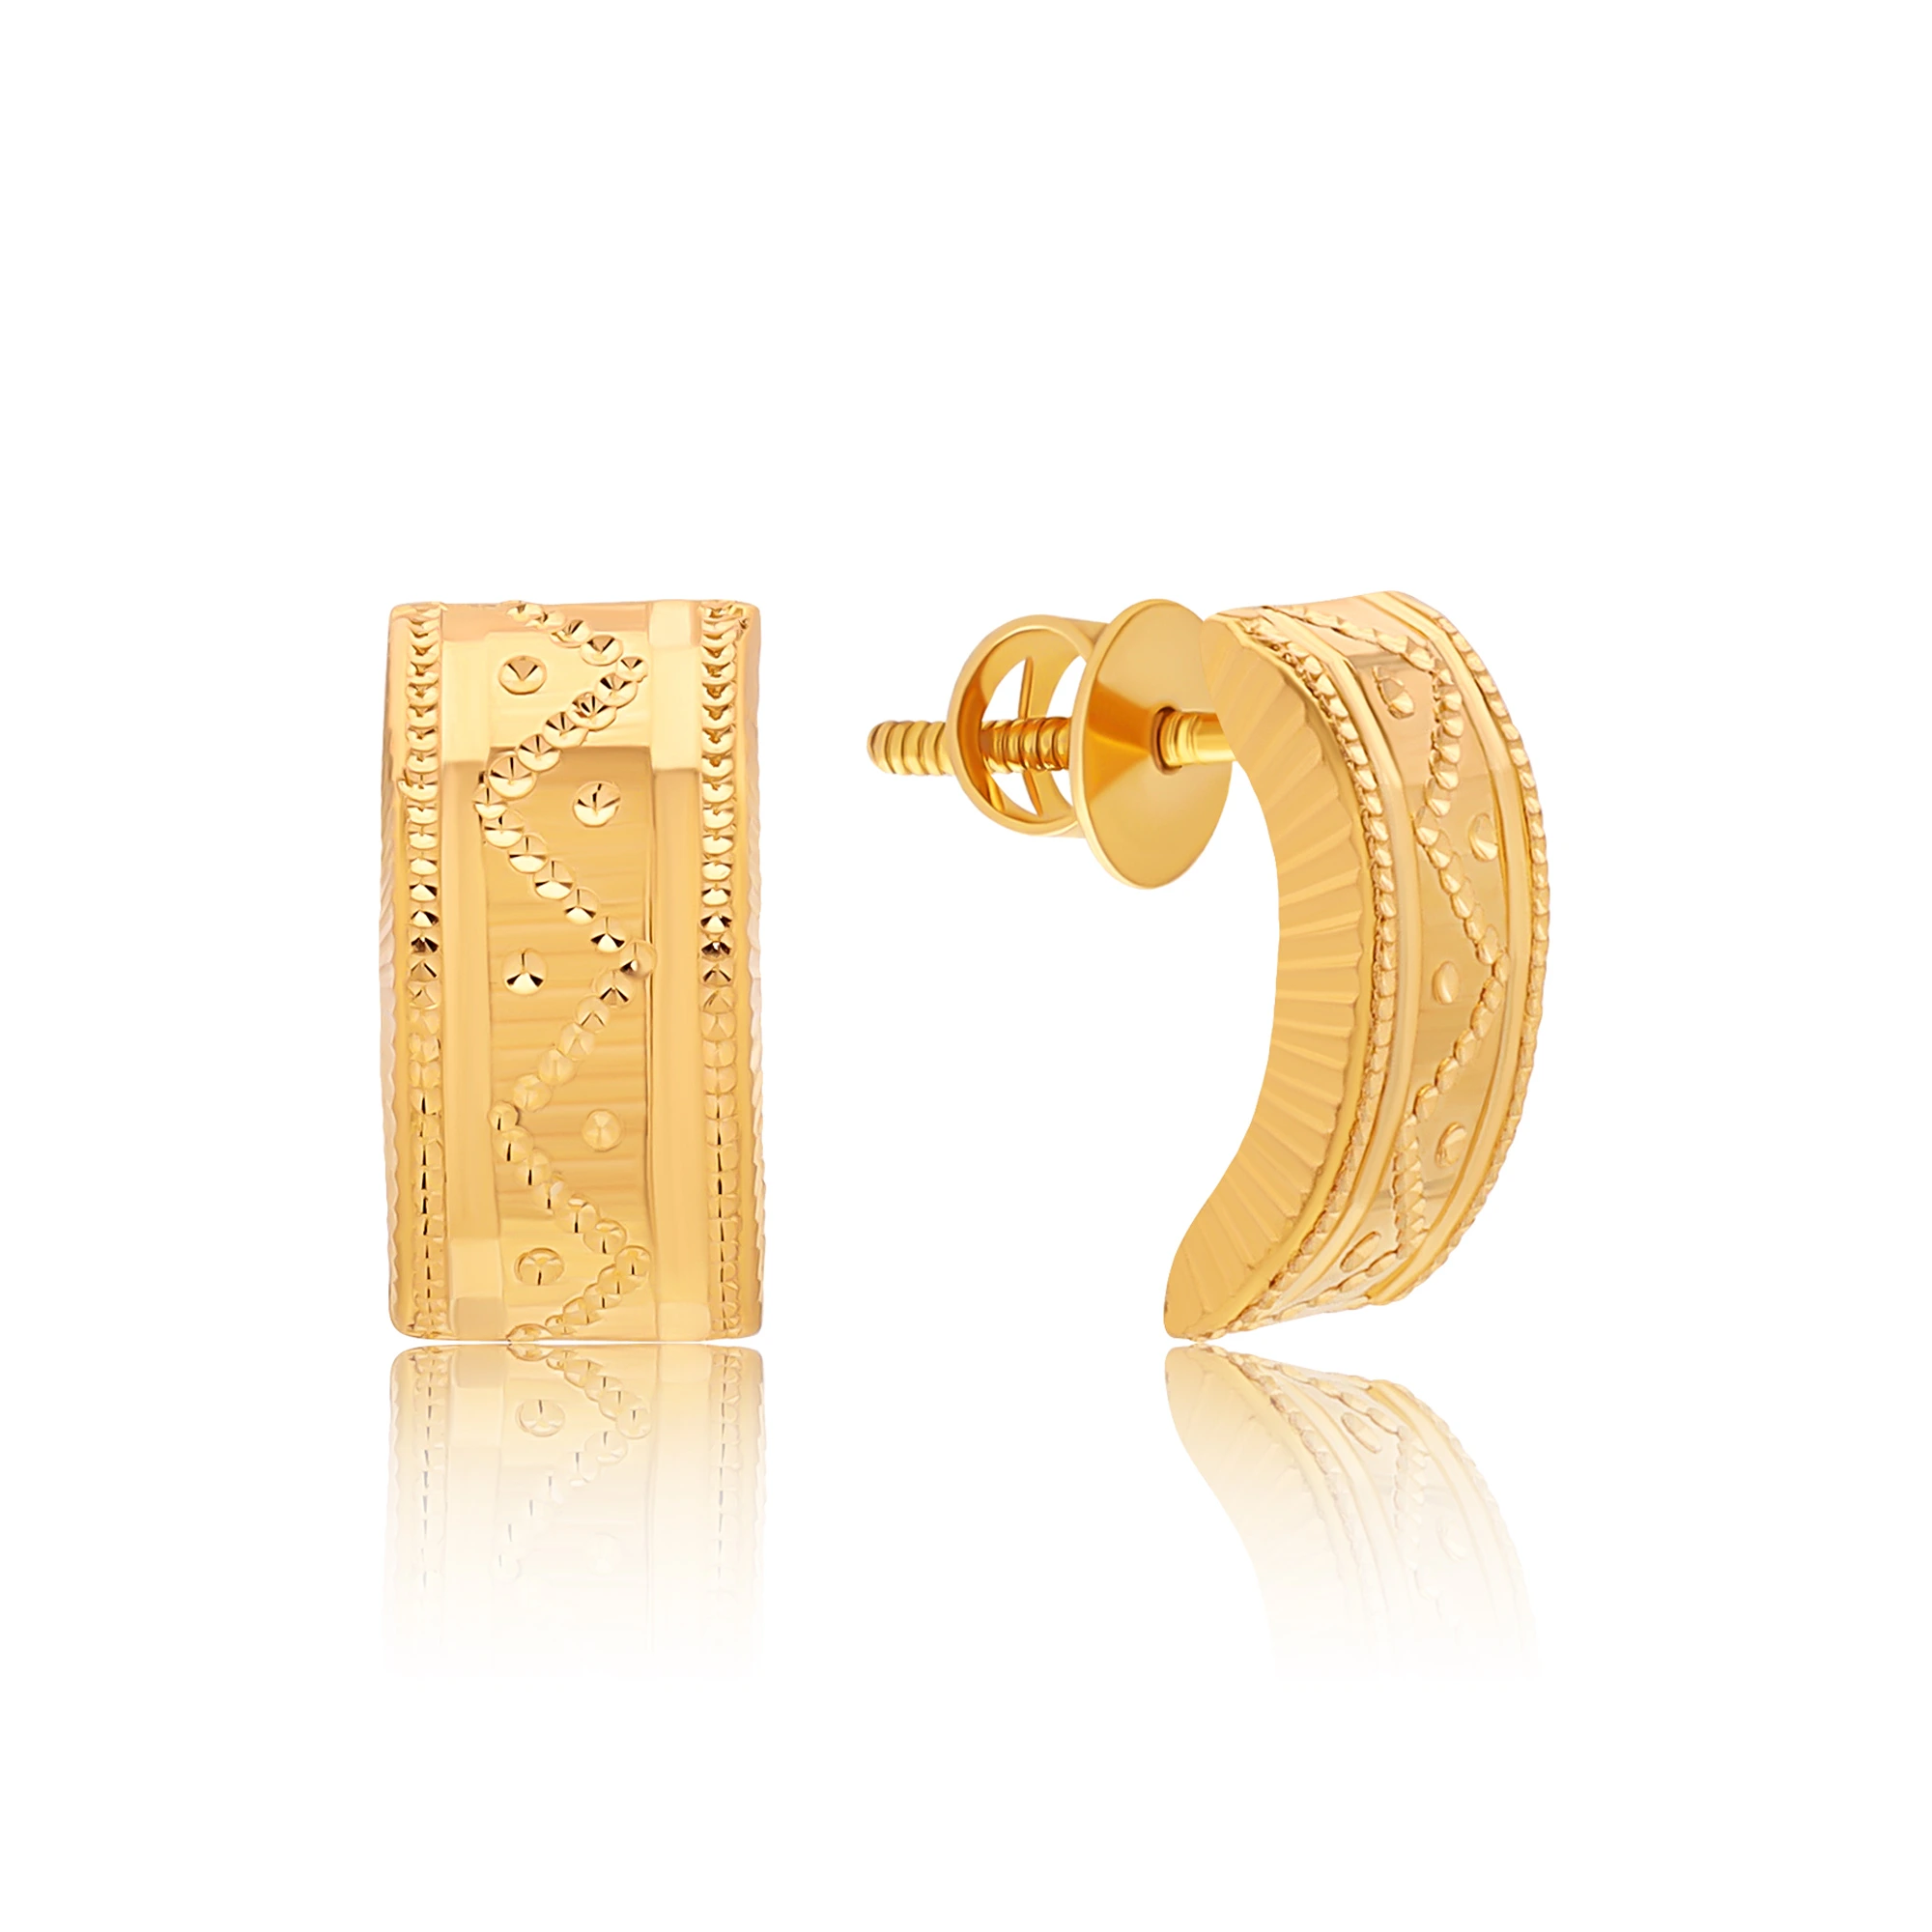 Beautiful hoop earrings designs latest 18k gold 22k gold plated - YouTube | Gold  earrings studs simple, Diamond earrings design, Gold earrings designs